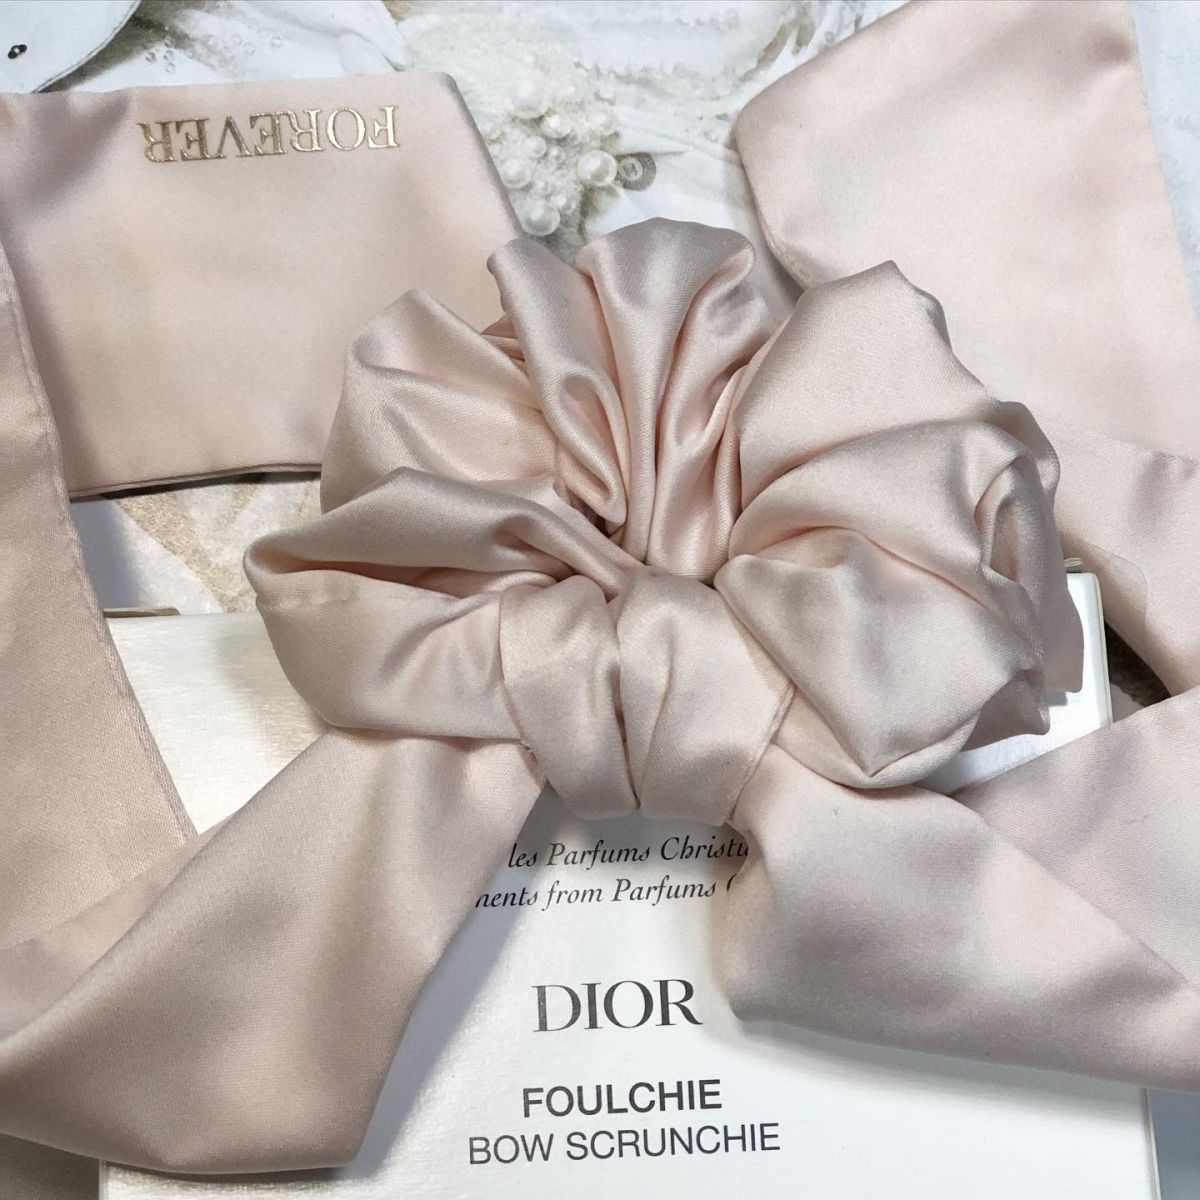 Резинка Christian Dior цена 3 847 руб /в коробке/